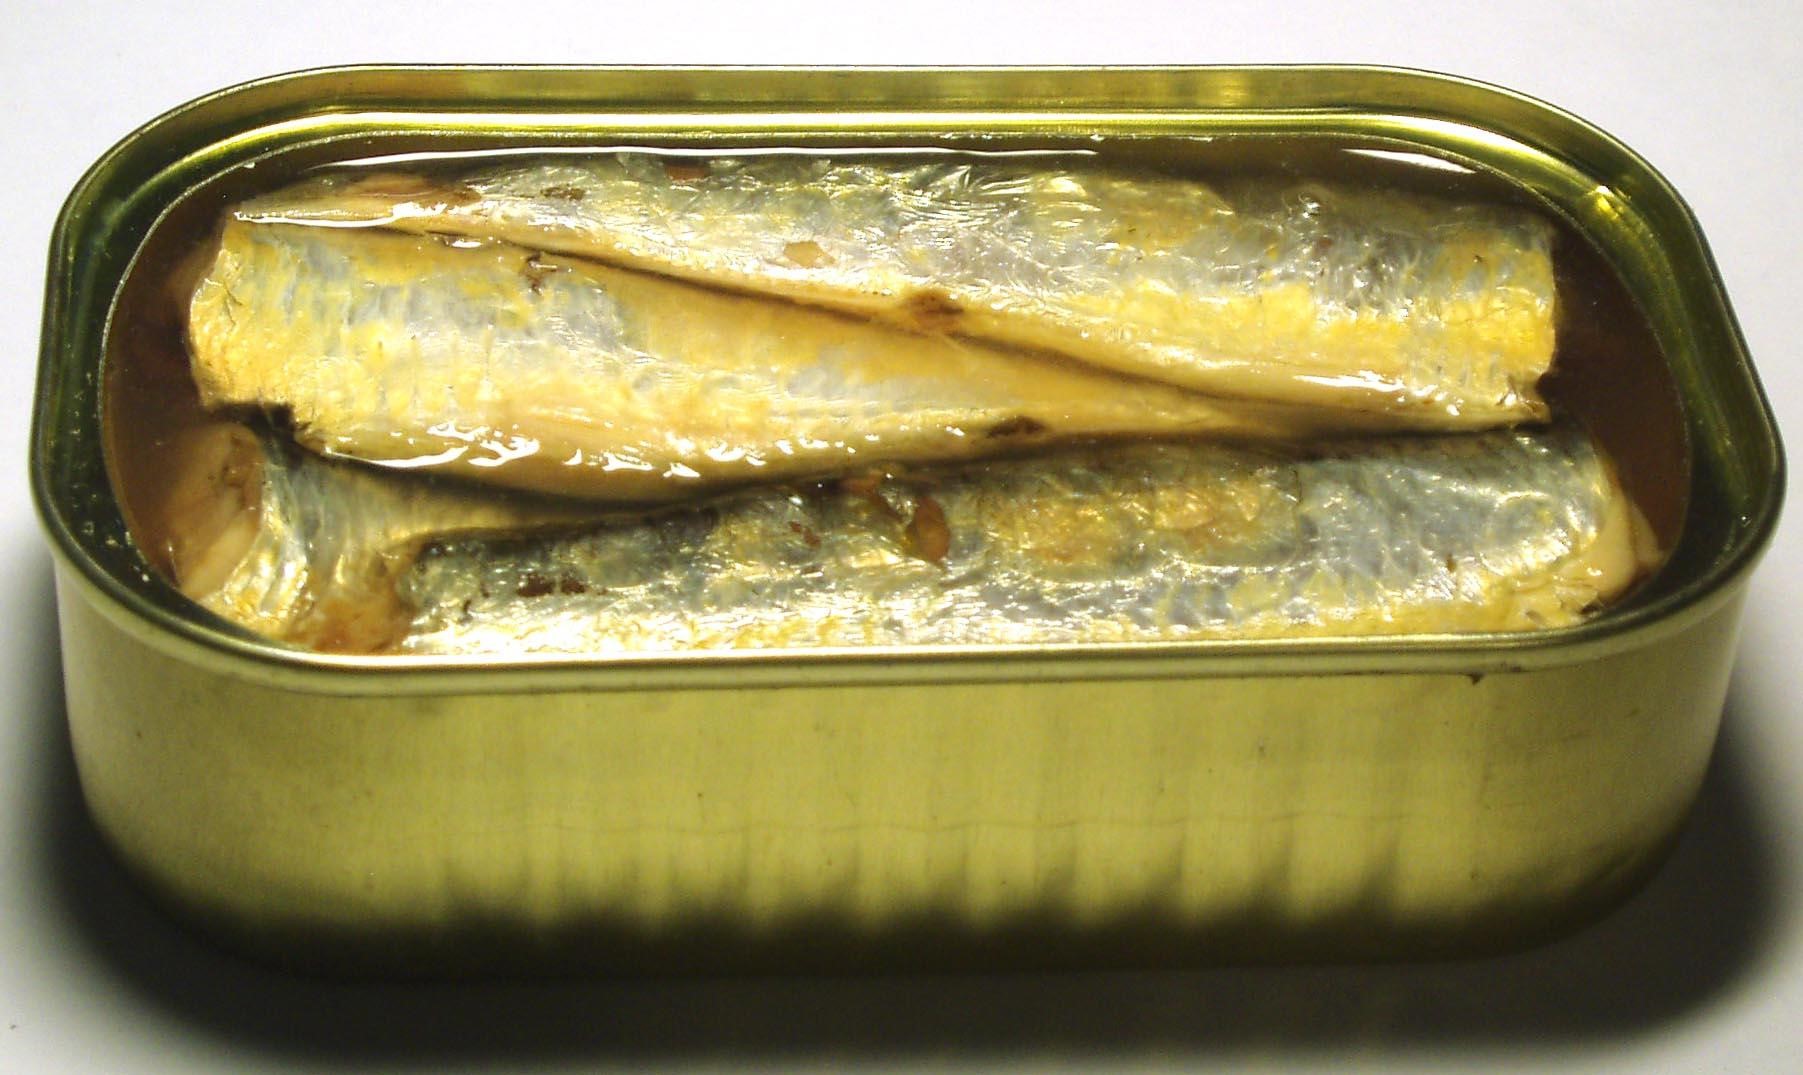 Eat fatty fish - sardines